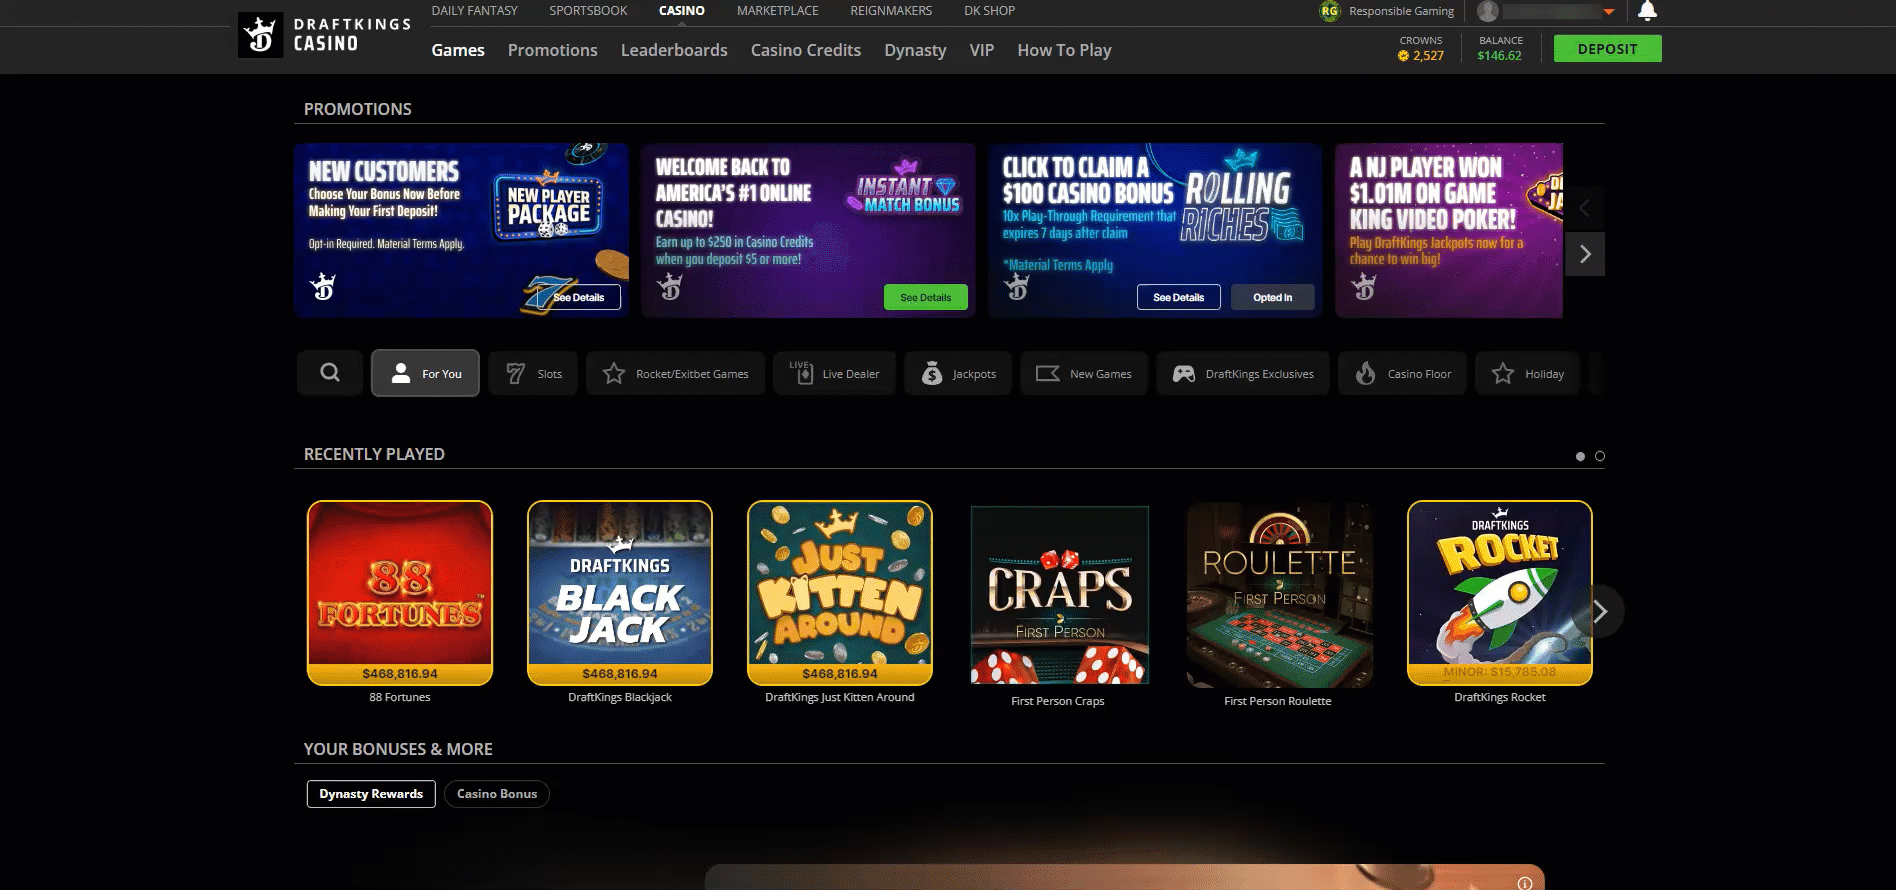 A visual walkthrough of how to find the Casino Bonus Tracker via the DrafKings website